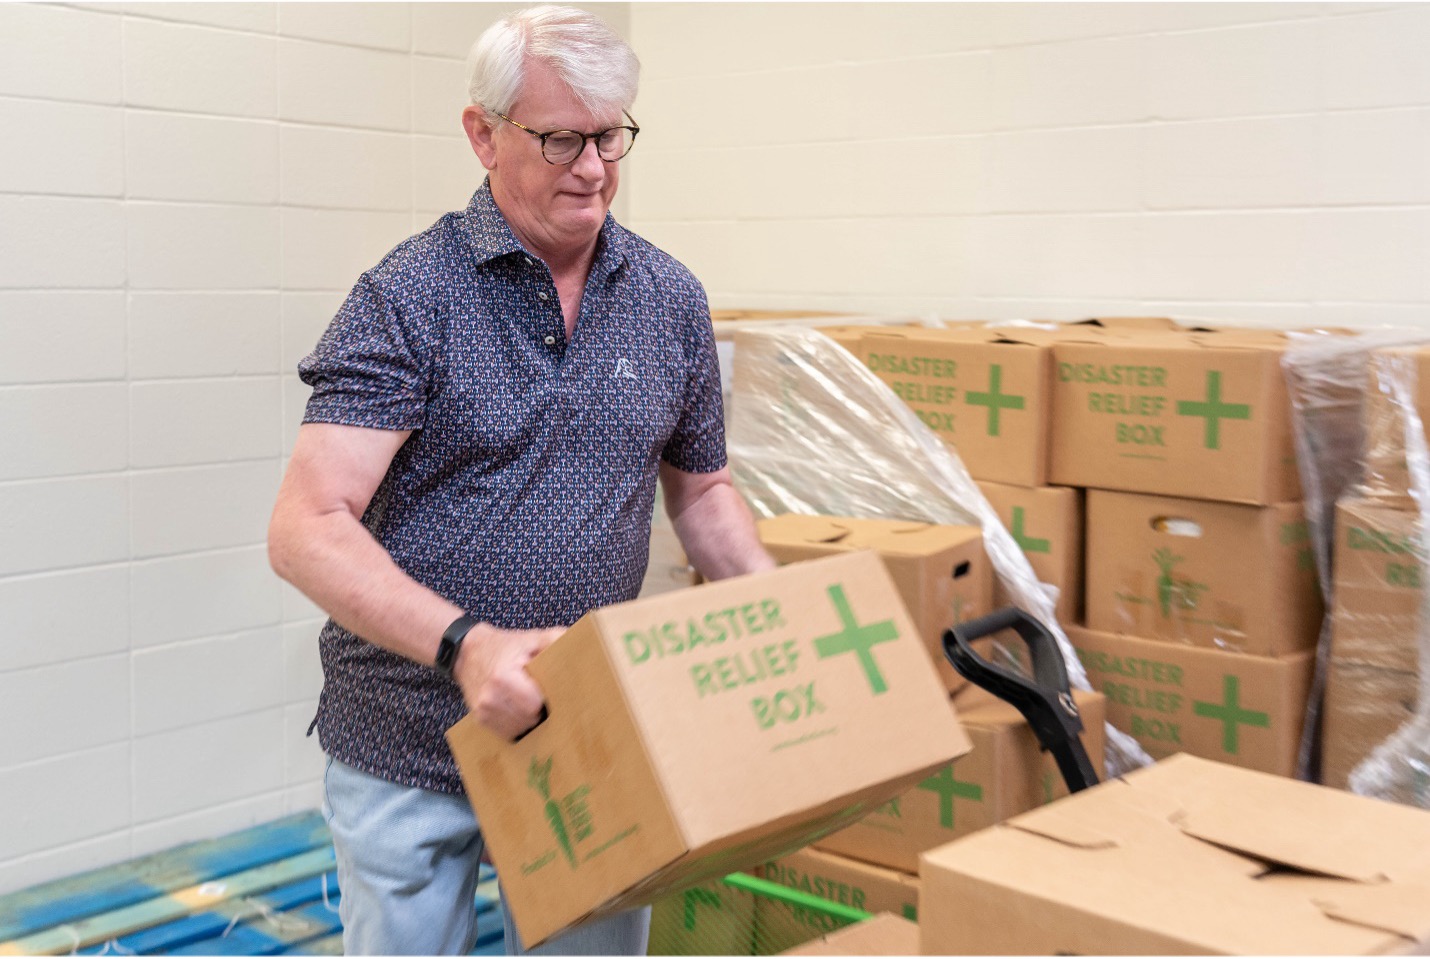 Food Bank volunteer Trey holds disaster relief box of food